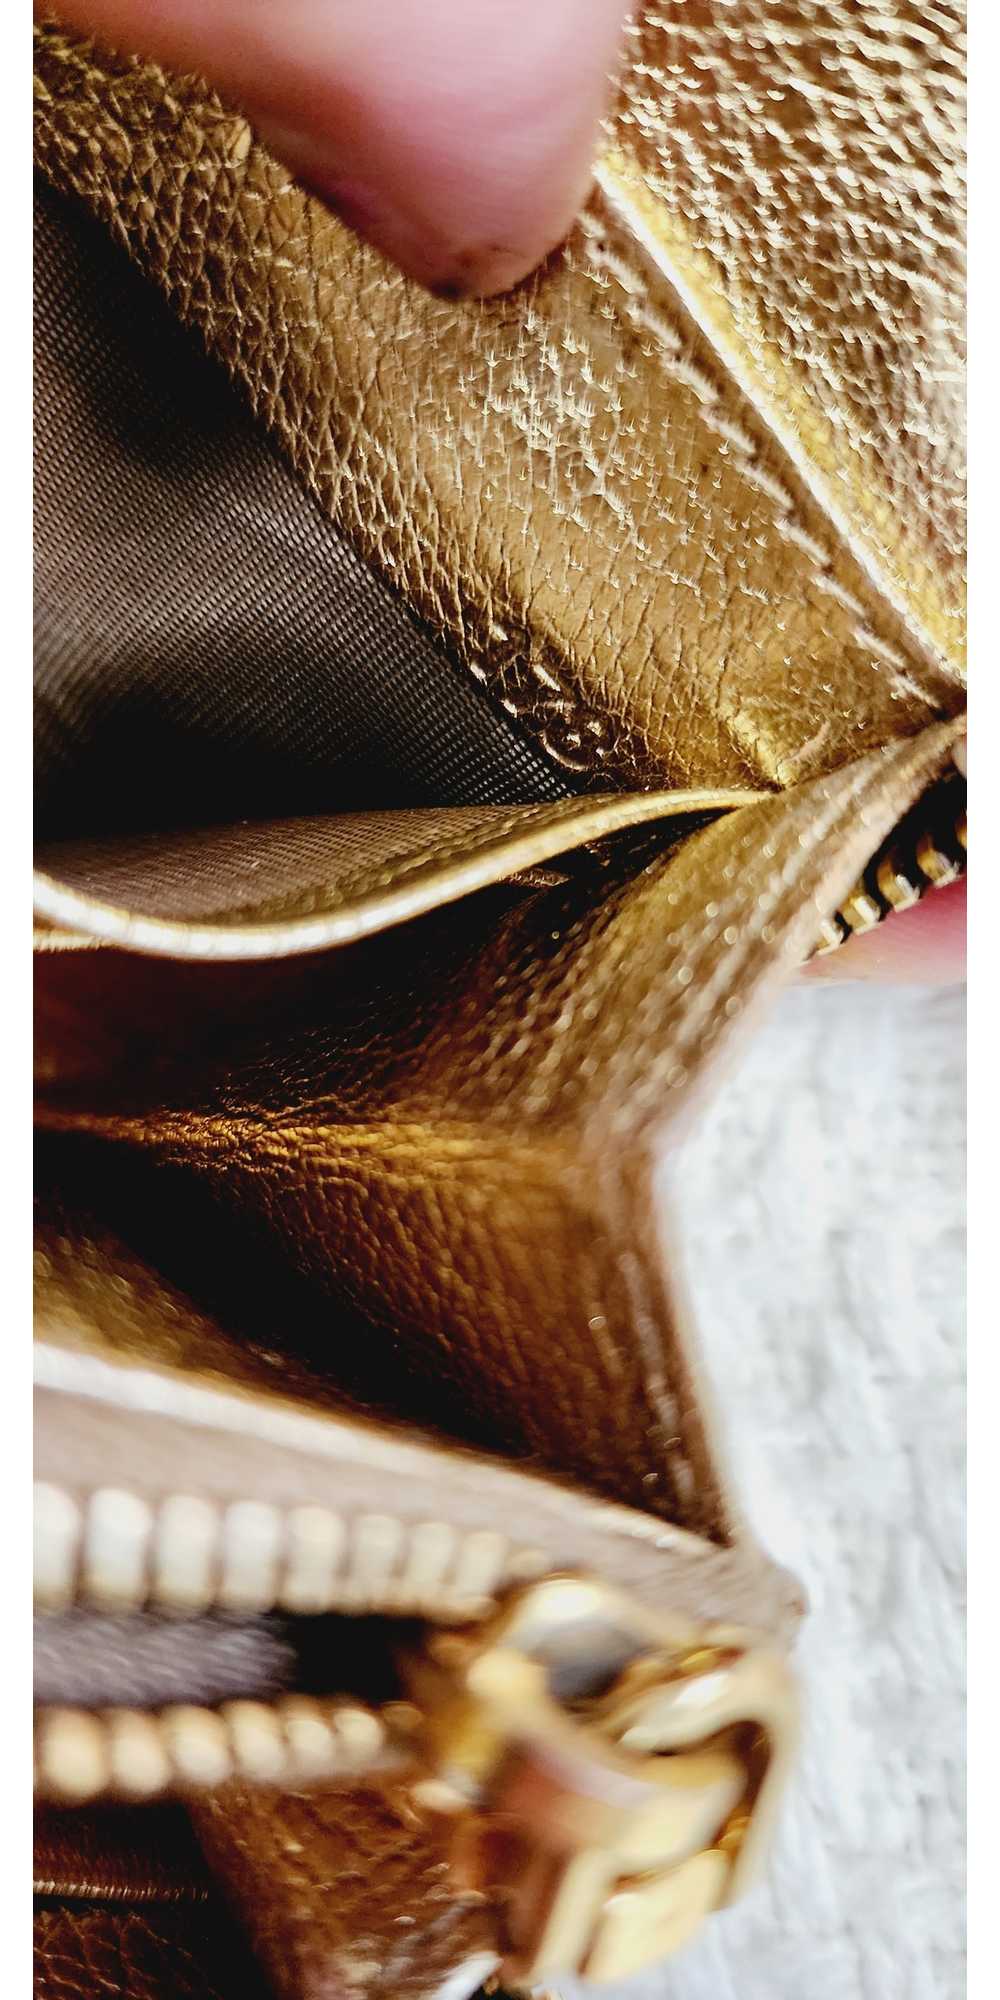 Prada Raffia Woven & Metallic Gold Leather Madras Frame Top Chain Bag